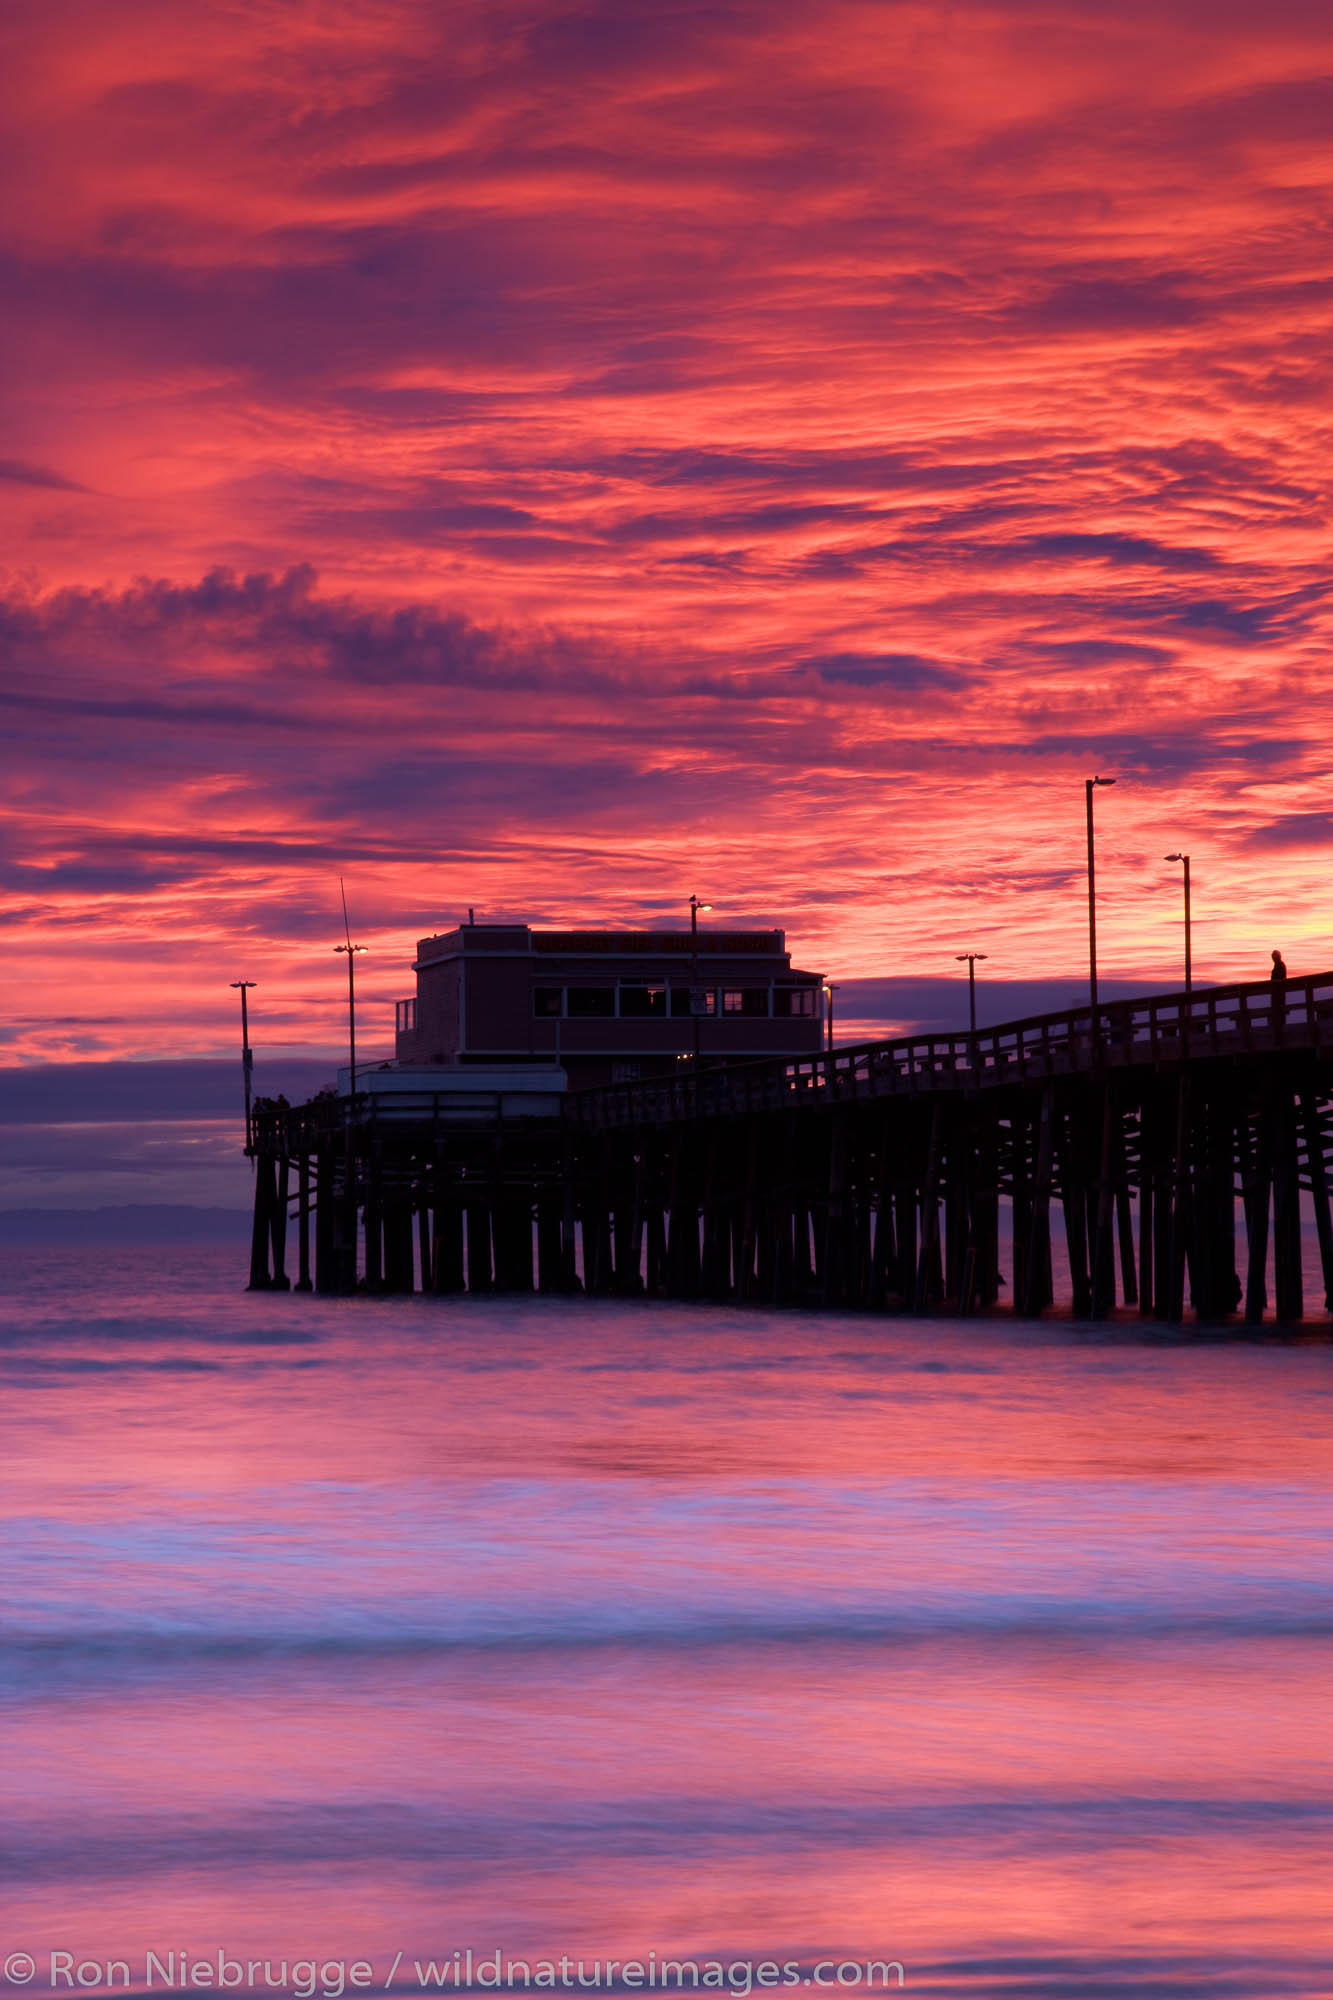 The Newport Pier, Newport Beach at sunset, Orange County, California.